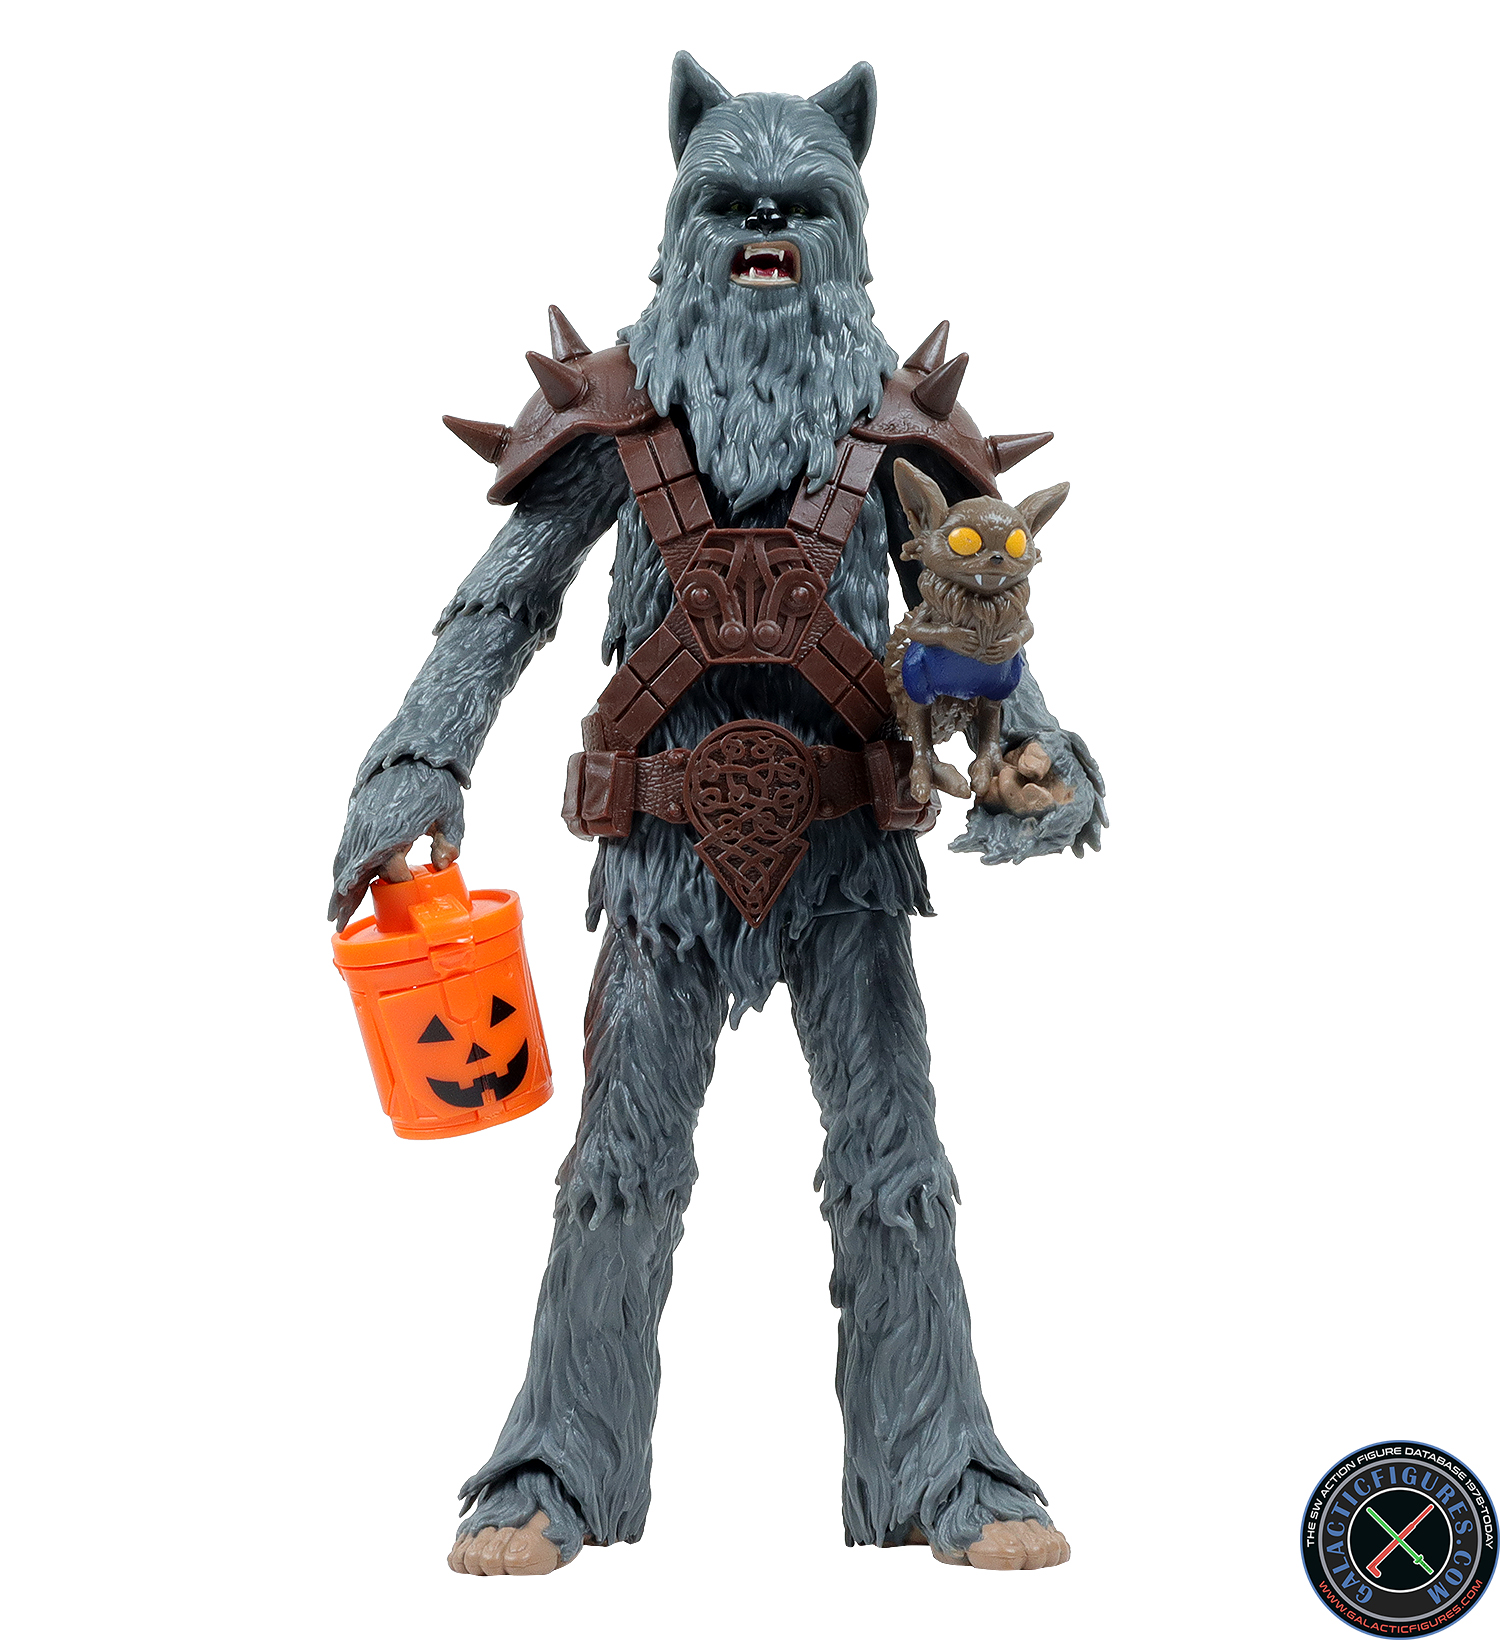 Wookiee 2022 Halloween Edition 2-Pack #1 of 2